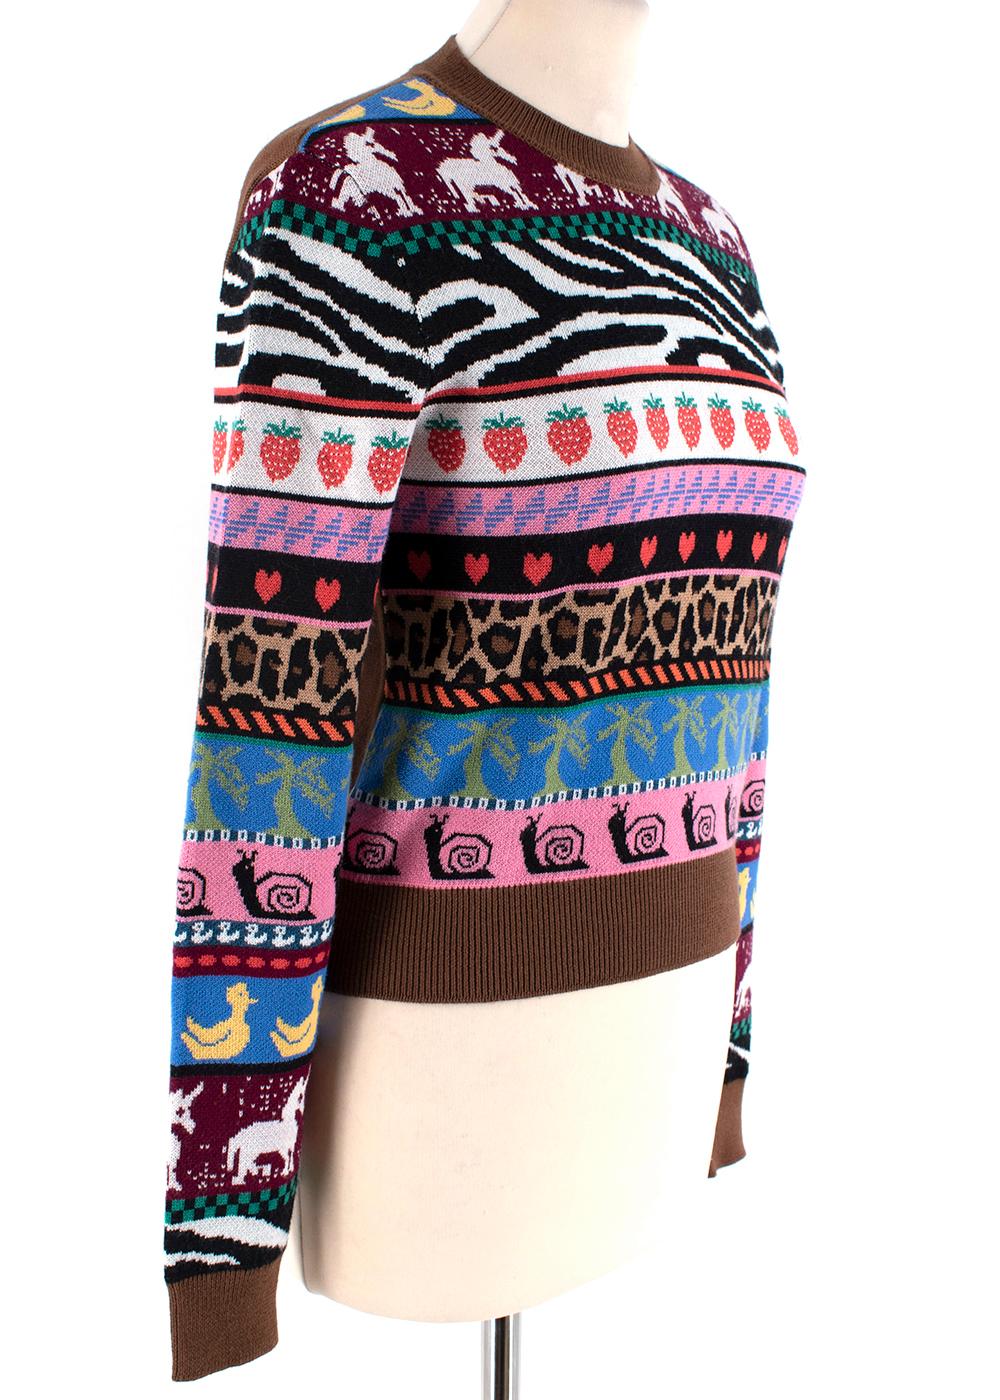 Miu Miu Virgin Wool Multi-Colour Patterned Jumper 

- Soft knitted wool
- Multi coloured/patterned motif detailing 
- Leopard and zebra patterned accents 
- Soft brown stretch knit neckline, back, cuffs and hemline 

Materials: 
100% virgin